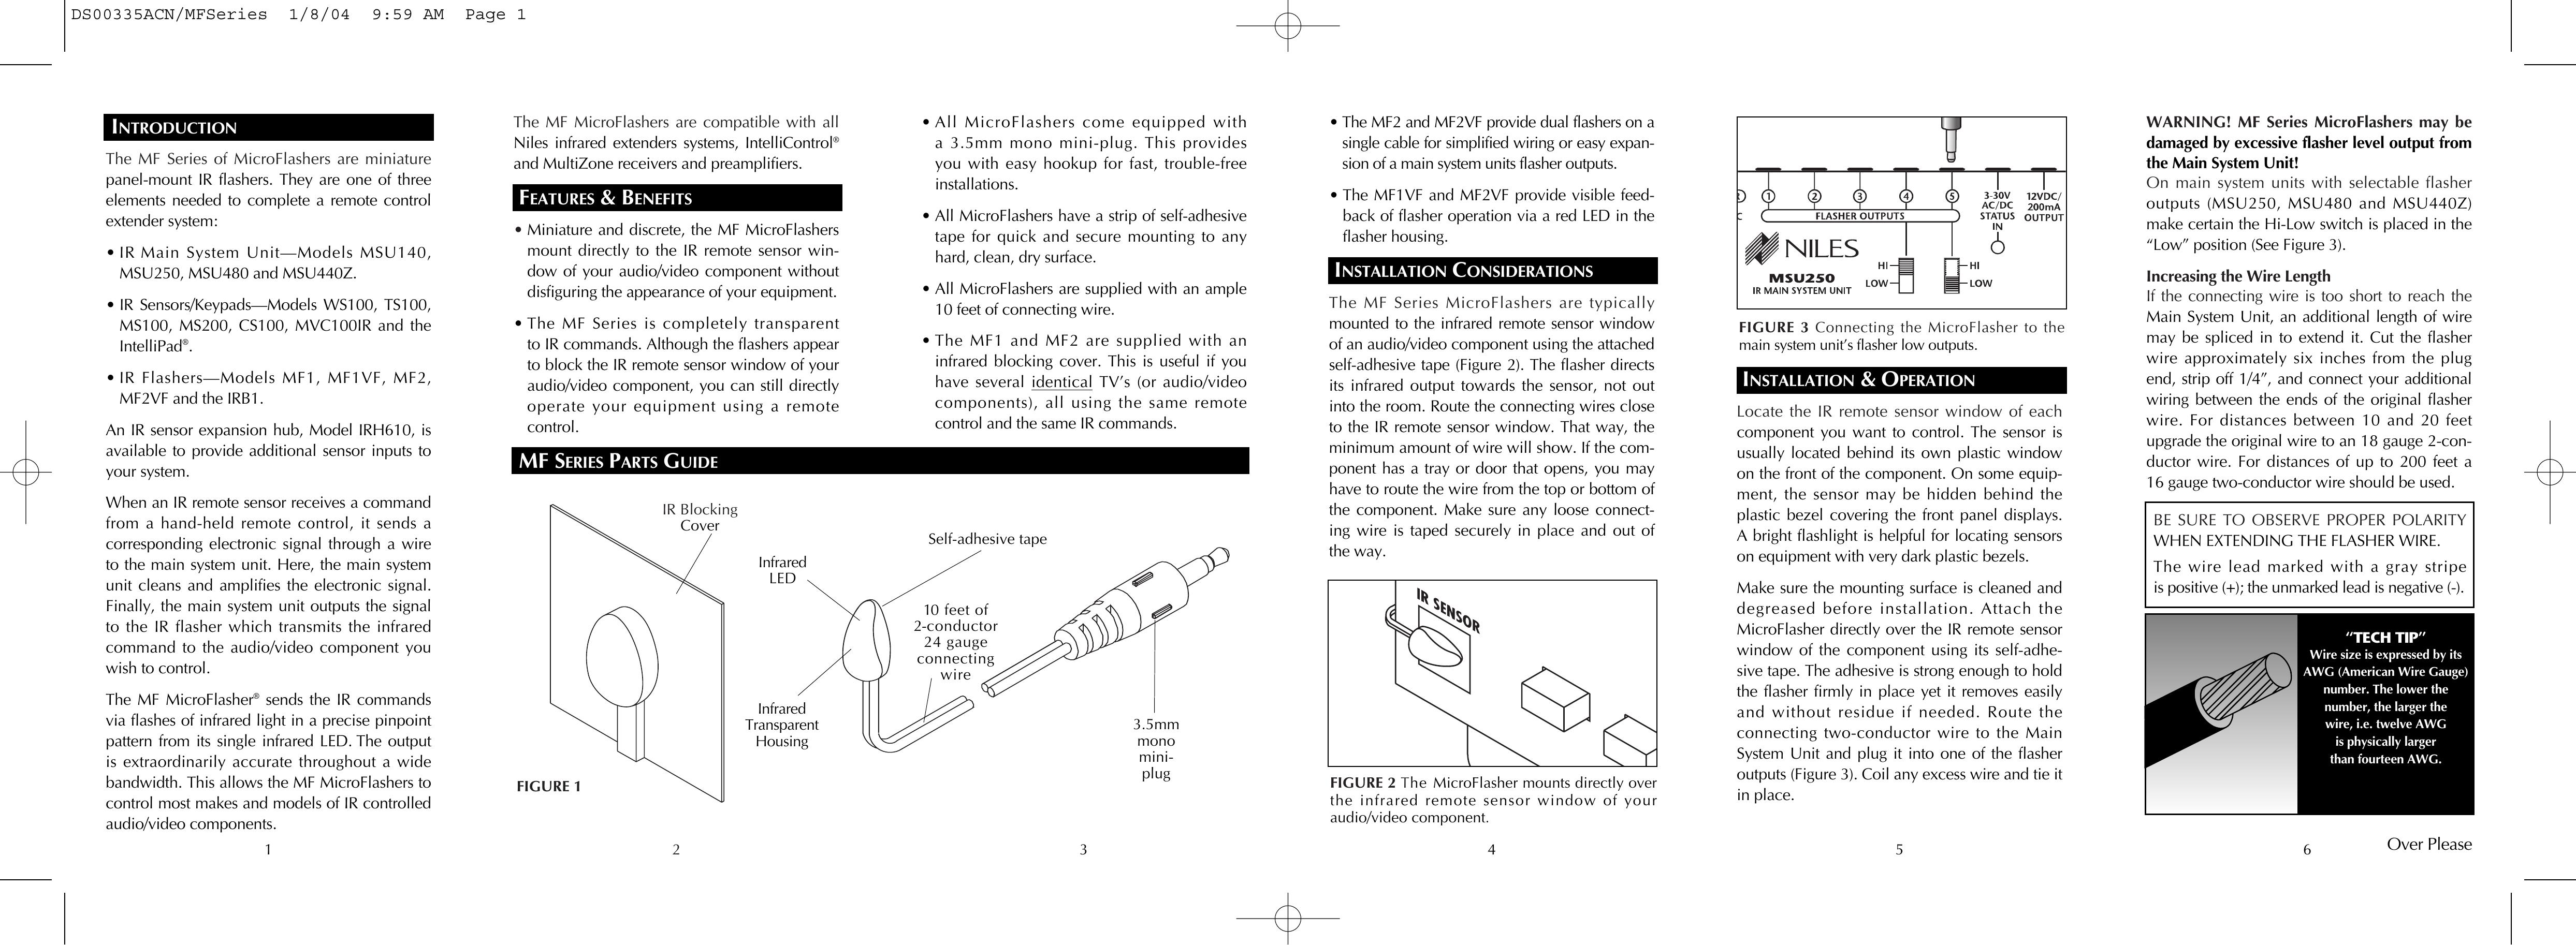 Niles Audio MSU440Z Microscope & Magnifier User Manual